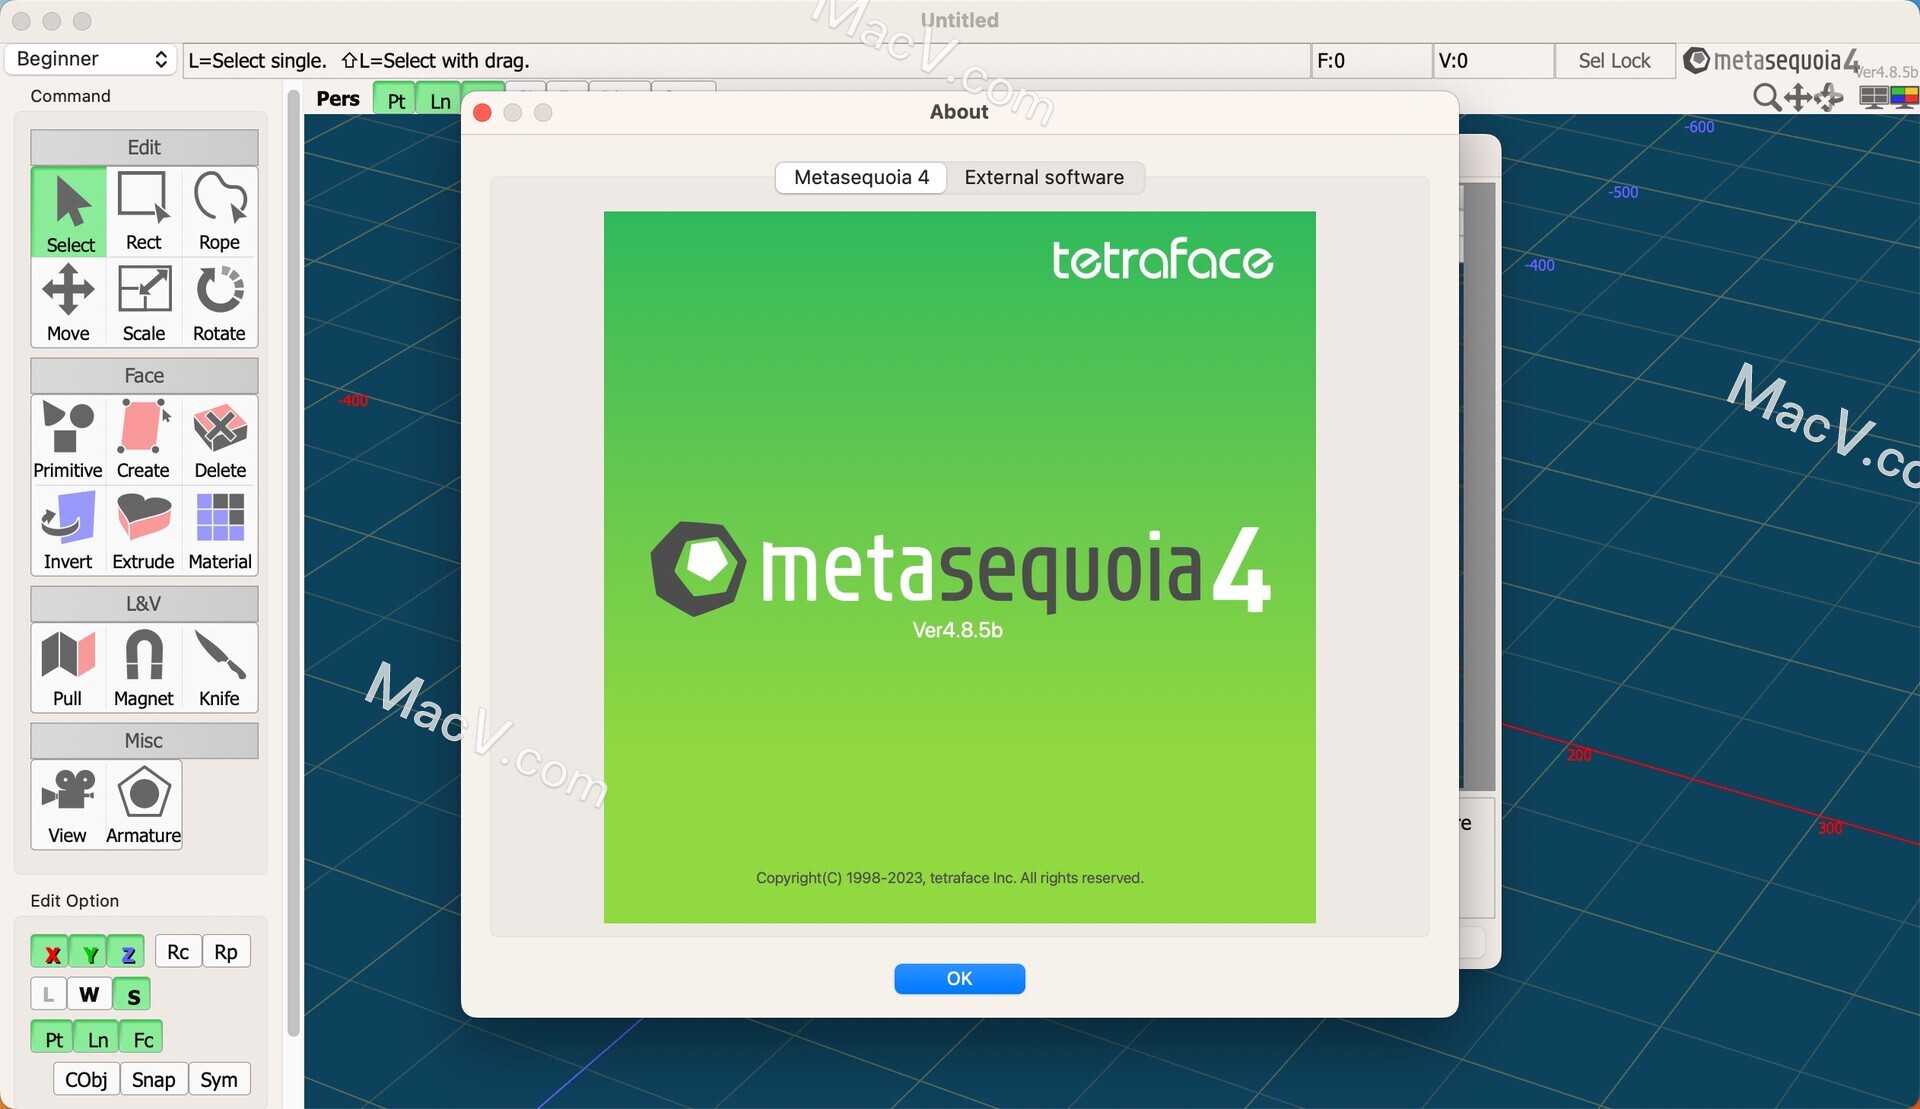 download the last version for apple Metasequoia 4.8.6